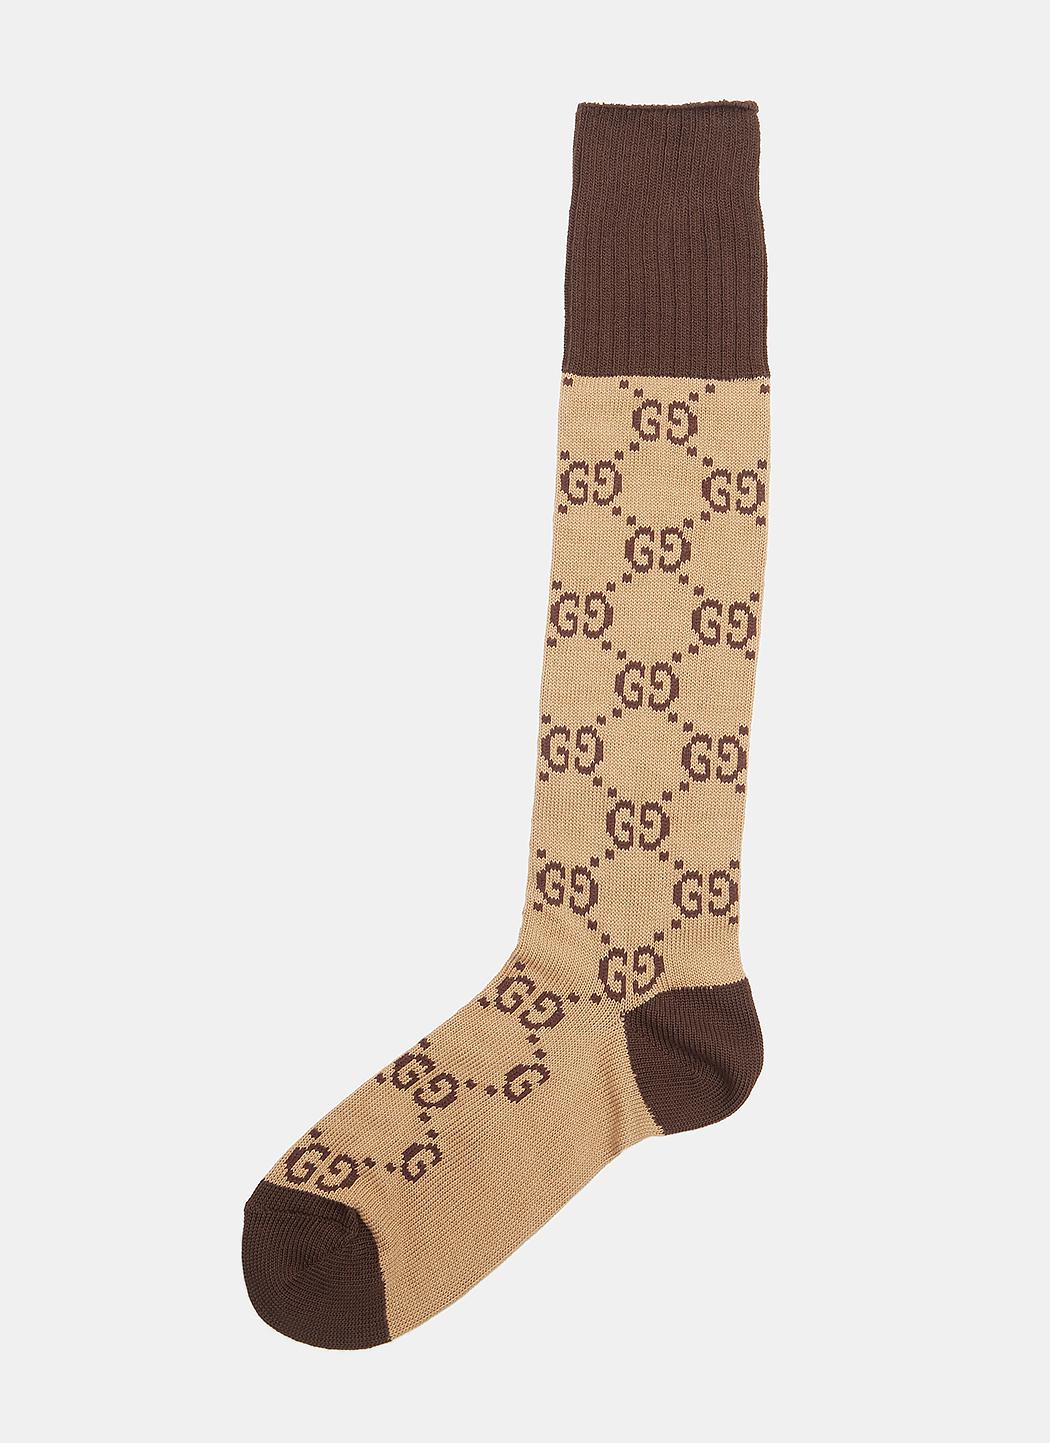 Gucci Cotton Interlocking Gg Socks In Brown for Men - Lyst